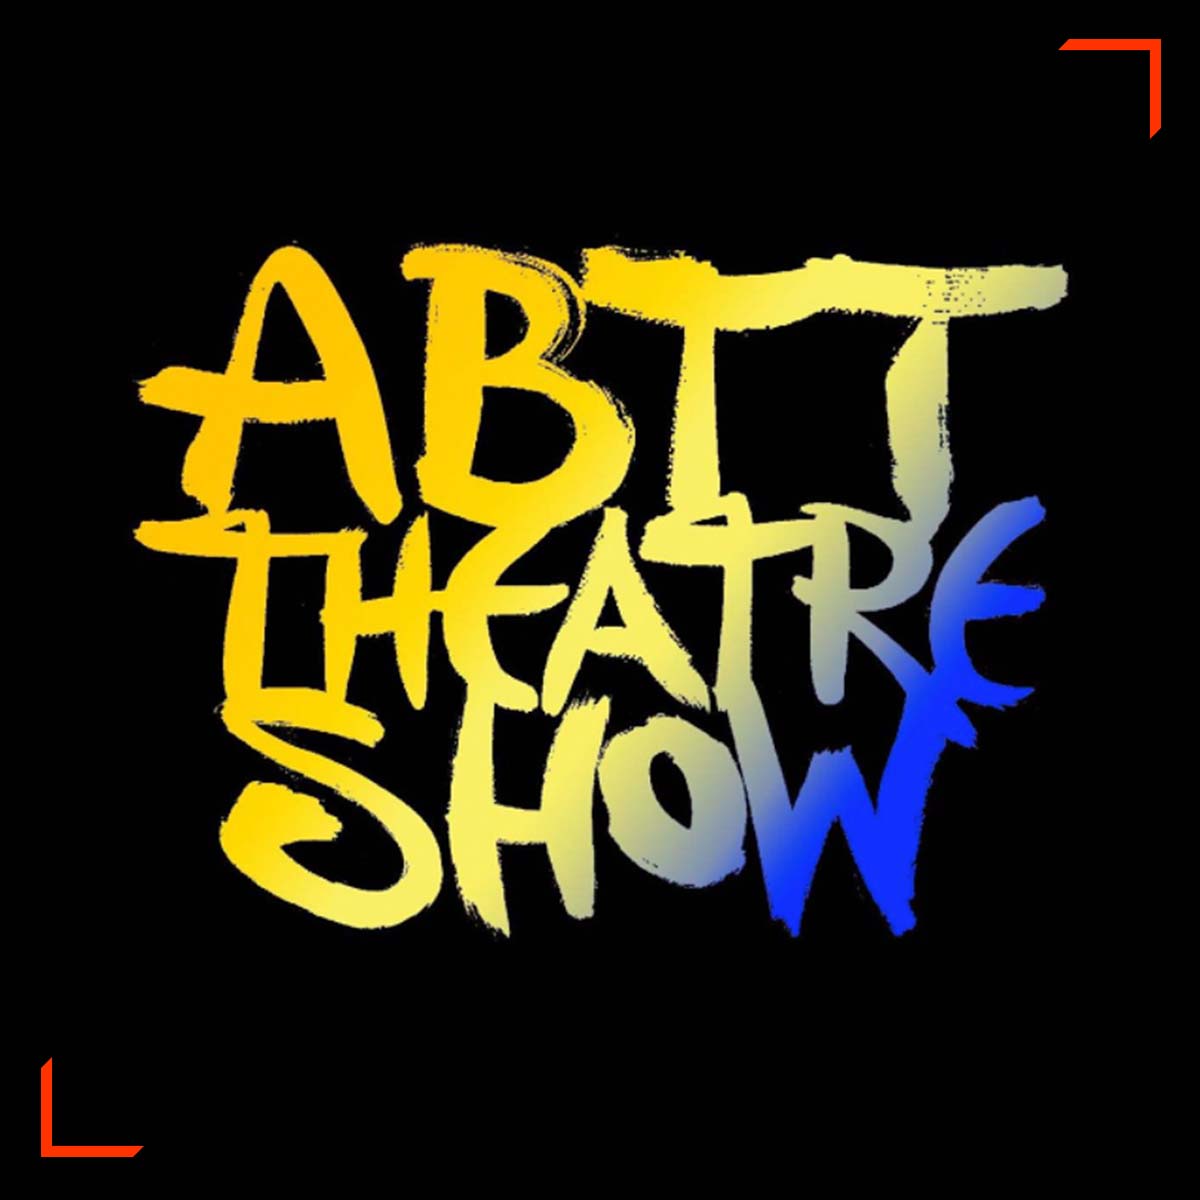 ABTT Theatre Show 1200px Square Image